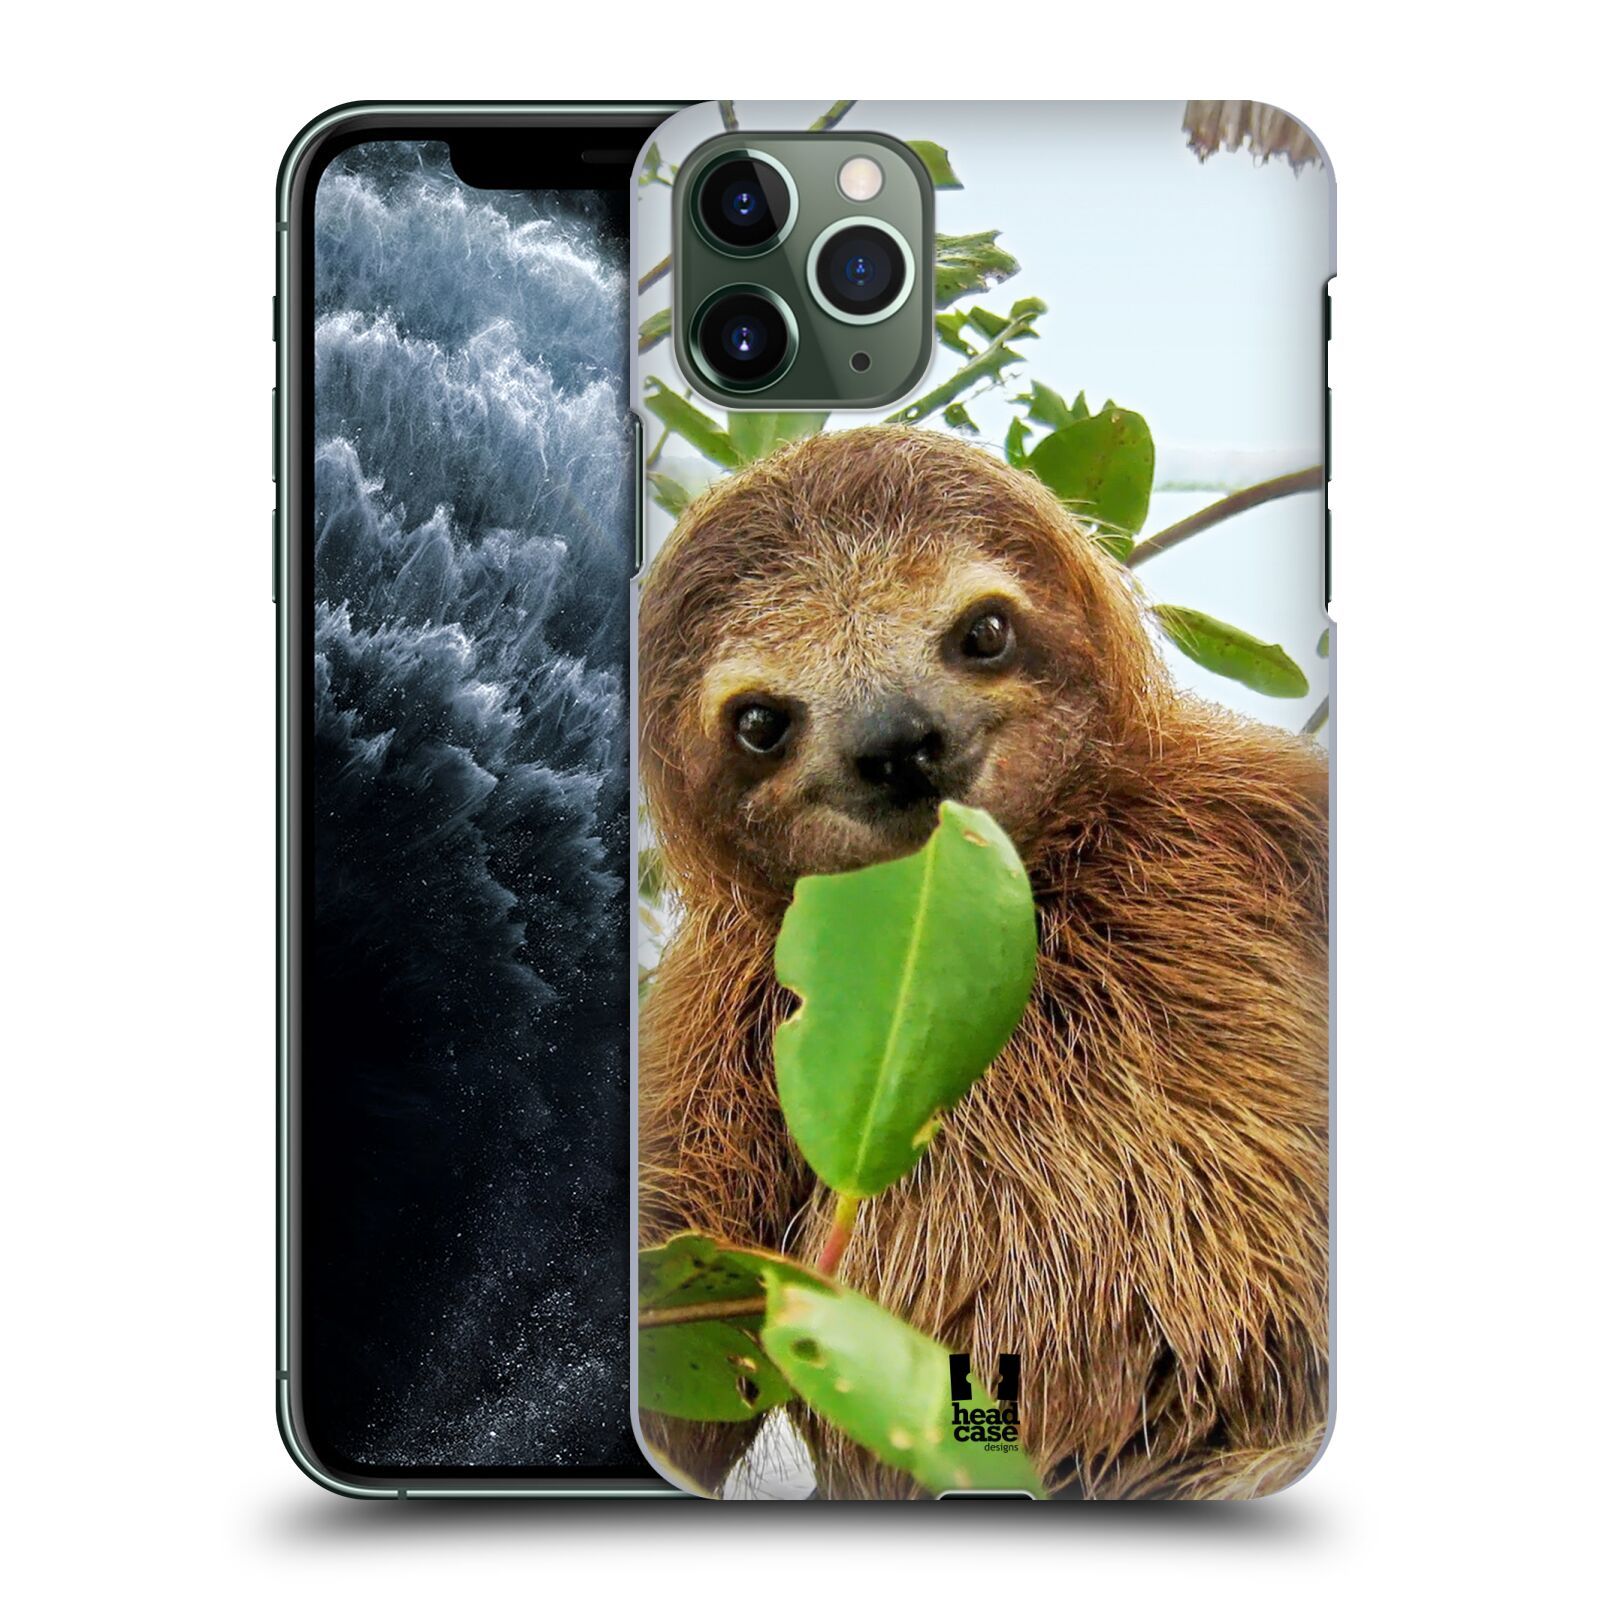 Pouzdro na mobil Apple Iphone 11 PRO MAX - HEAD CASE - vzor slavná zvířata foto lenochod